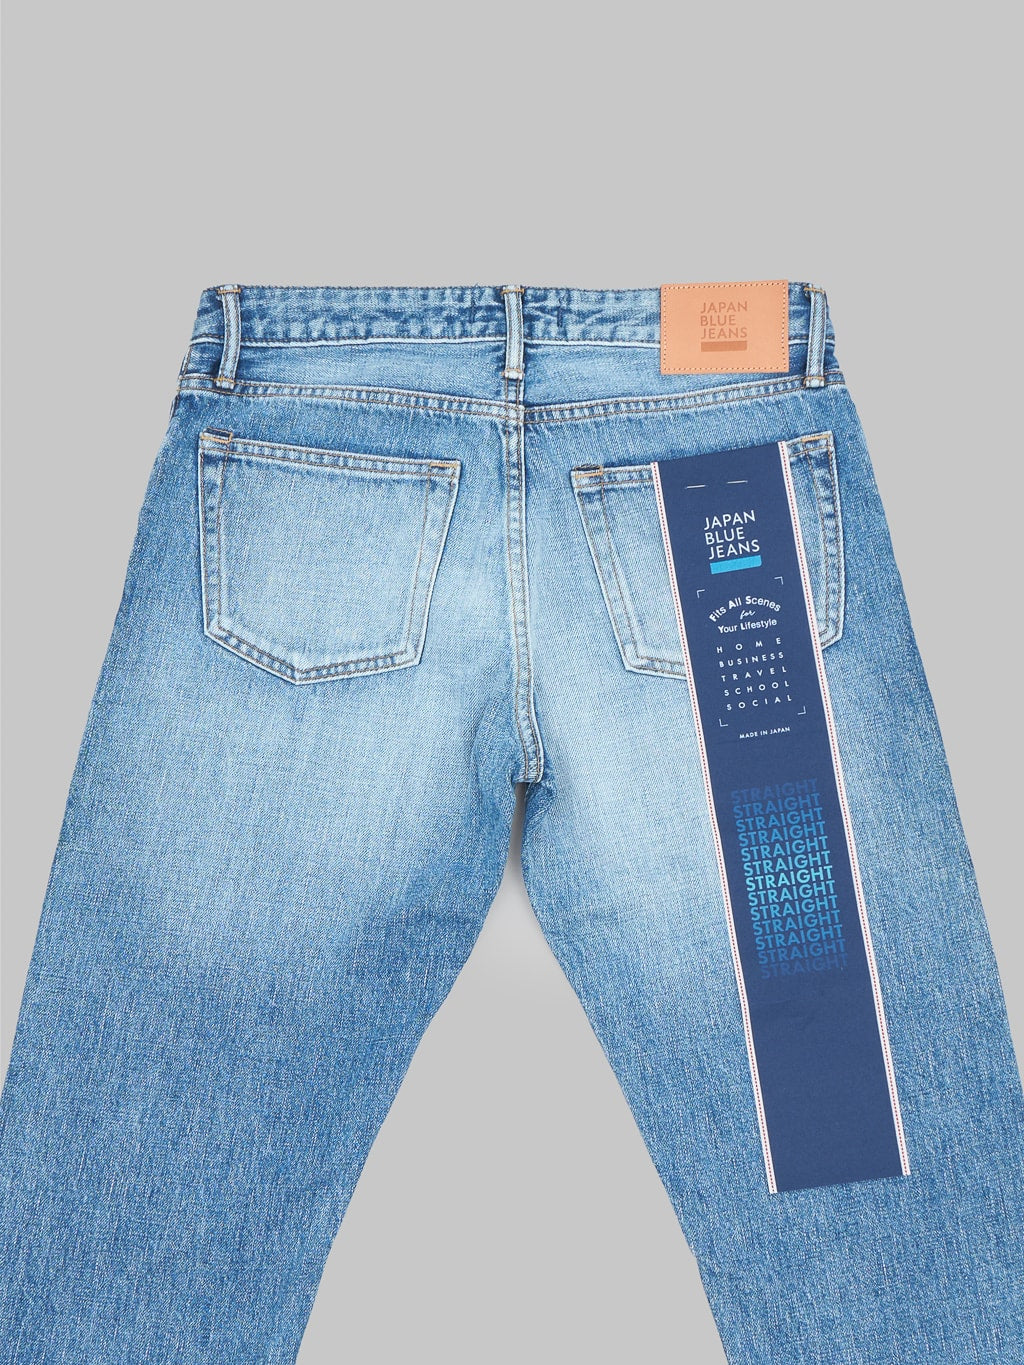 Japan Blue J304 Africa cotton Stonewashed Straight Jeans  back details